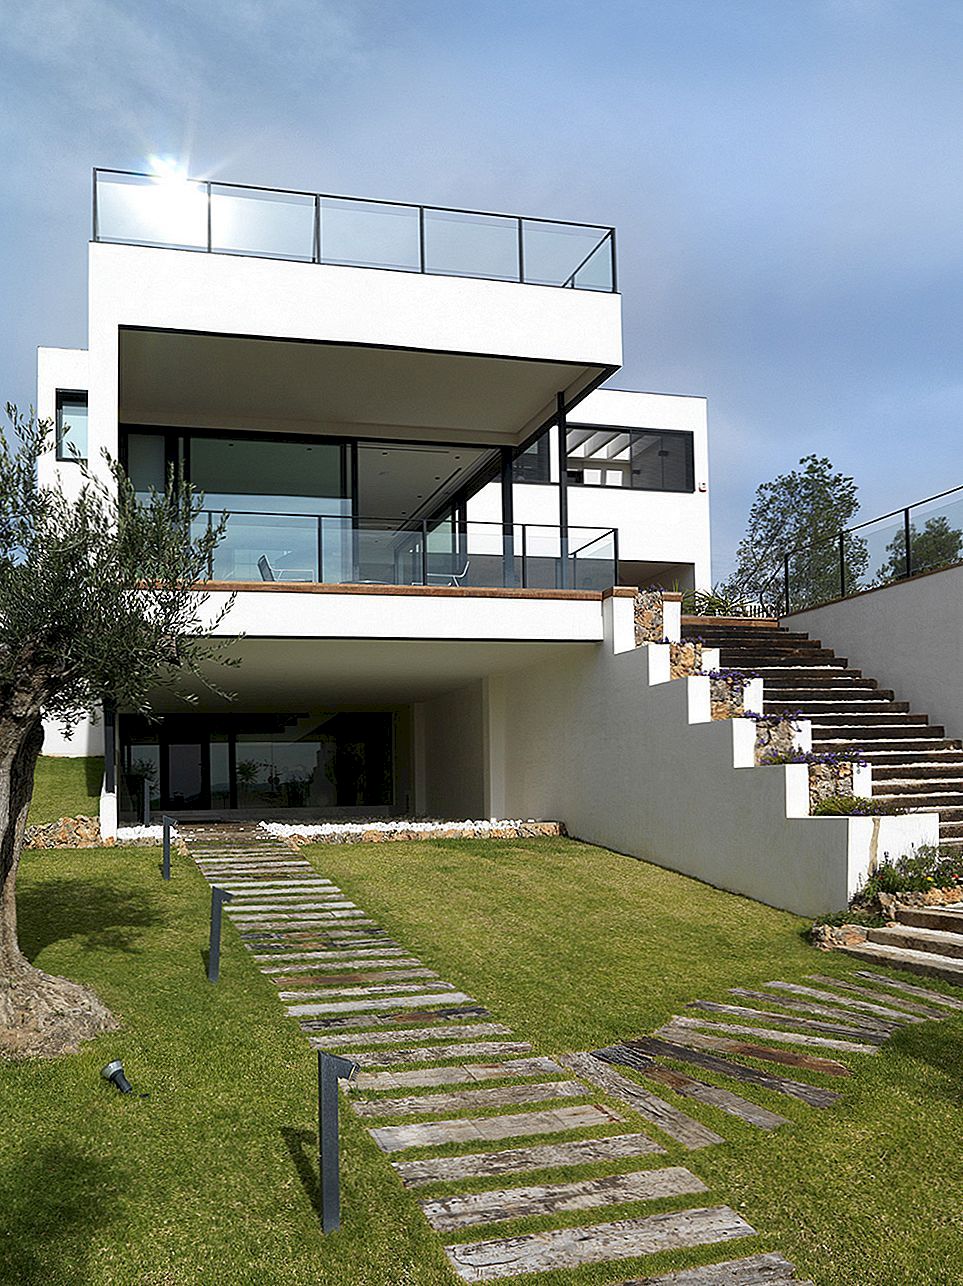 White Residence in Spanje met moderne volumes van LADAA Studio